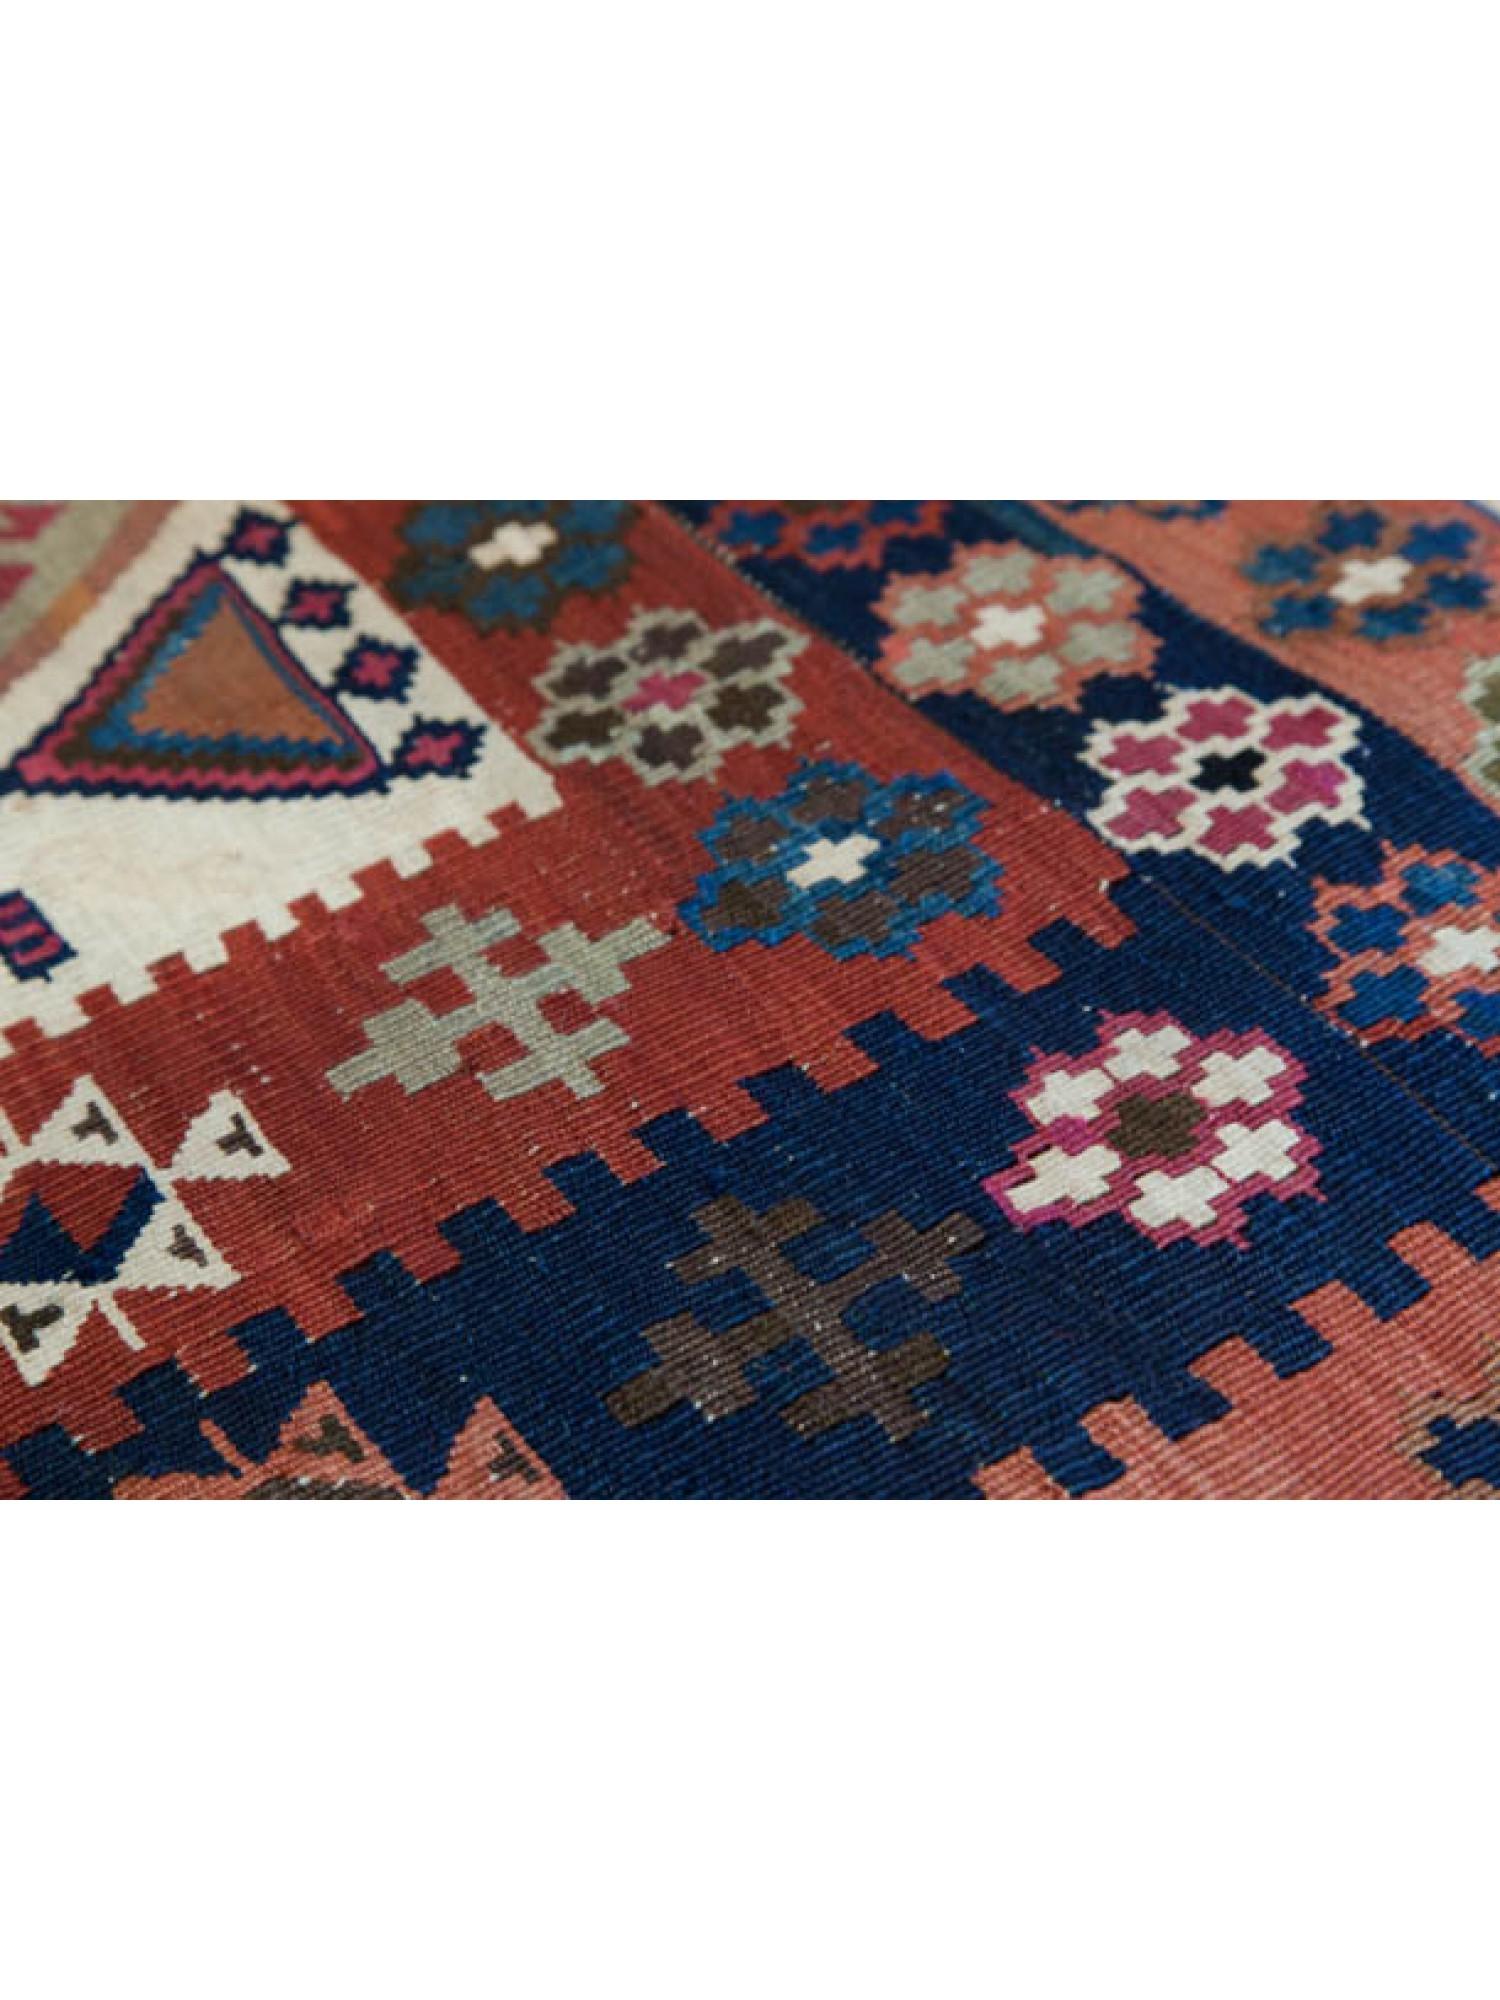 Wool Antique Reyhanli Kilim, Anatolian Rug Turkish Carpet For Sale